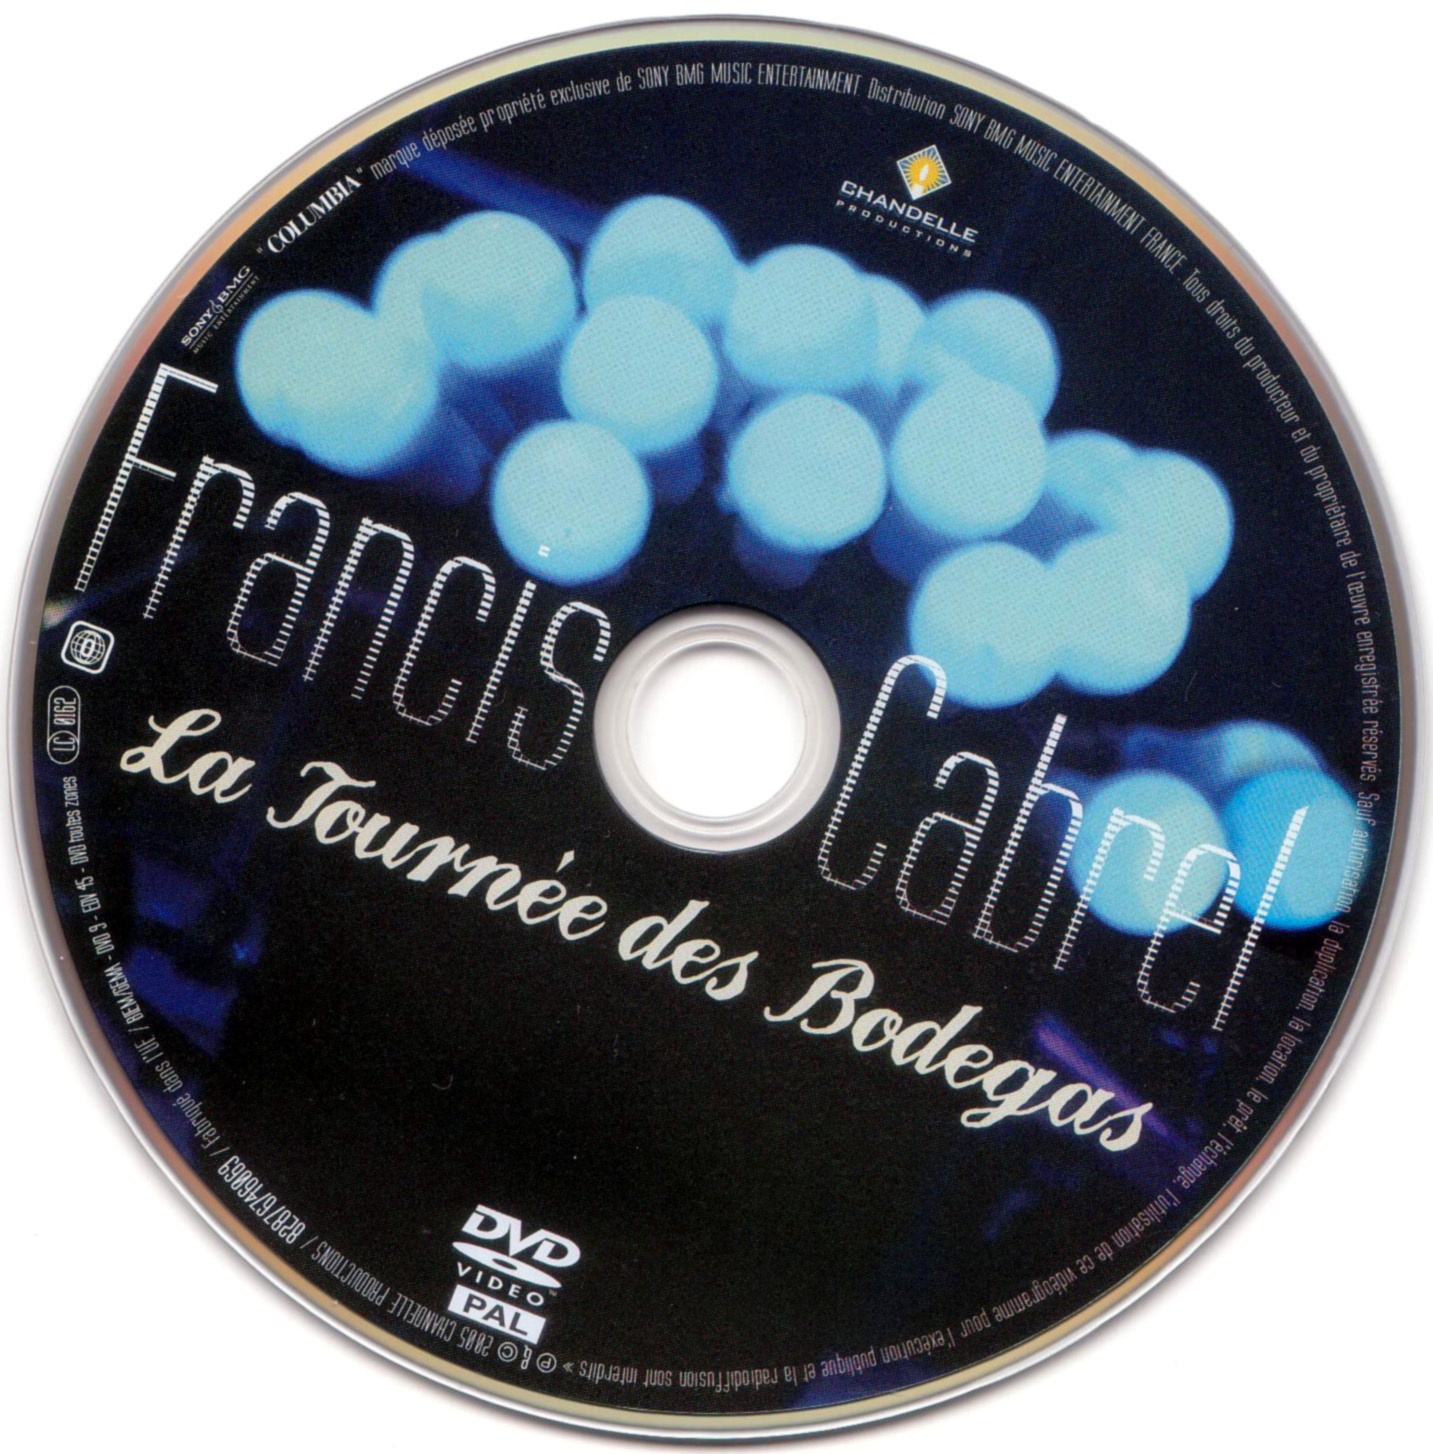 Francis Cabrel la tournee des bodegas DISC 1